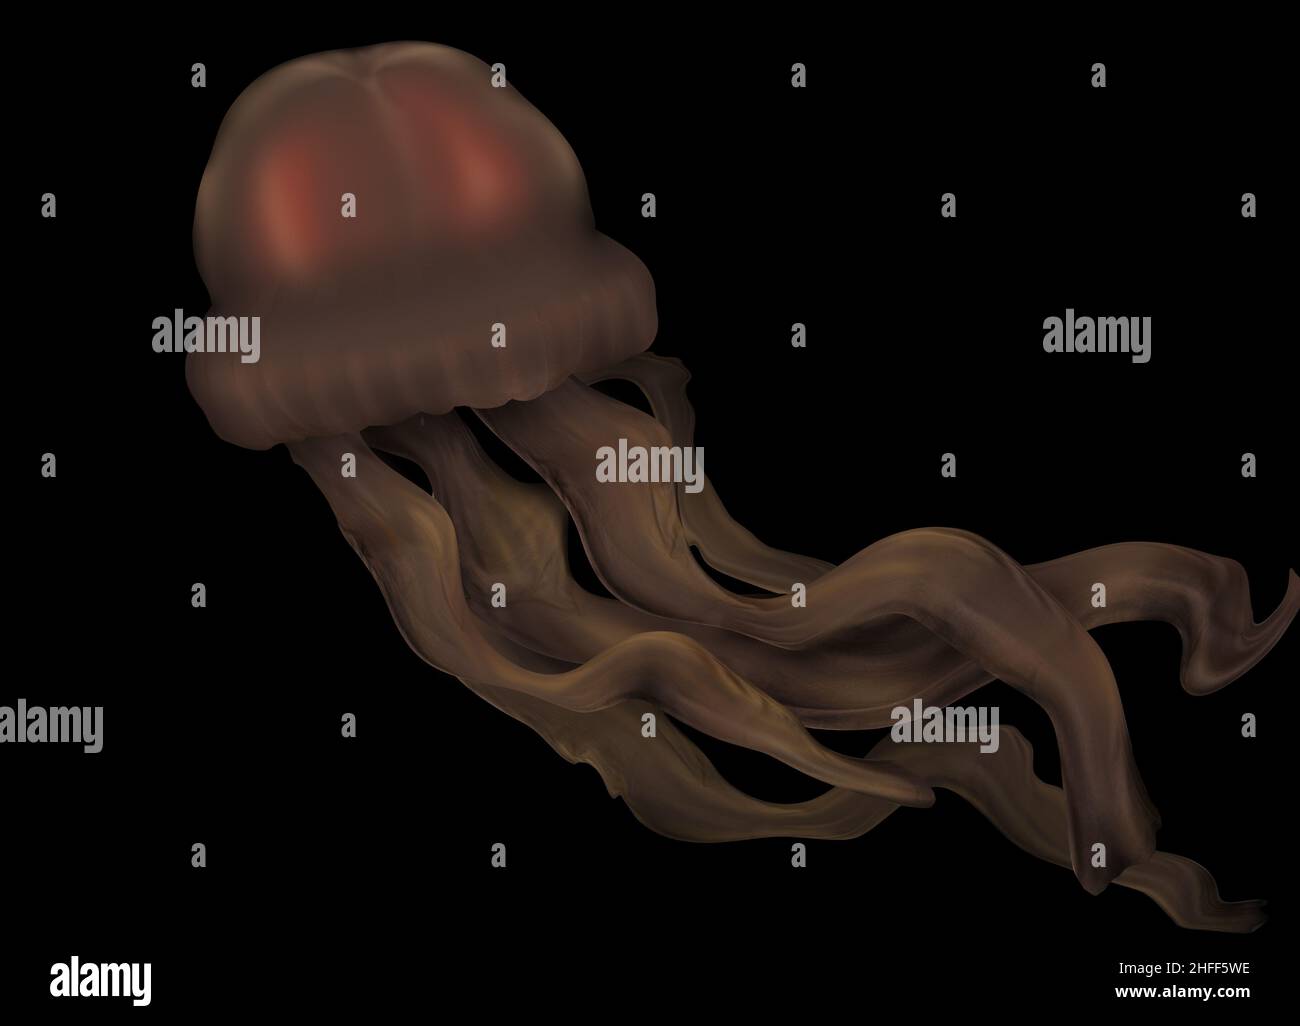 Medusas fantasma gigantes, Estigiomedusa gigantea criatura marina profunda. Medusas marrones con tentáculos largos, nuevas especies. Foto de stock